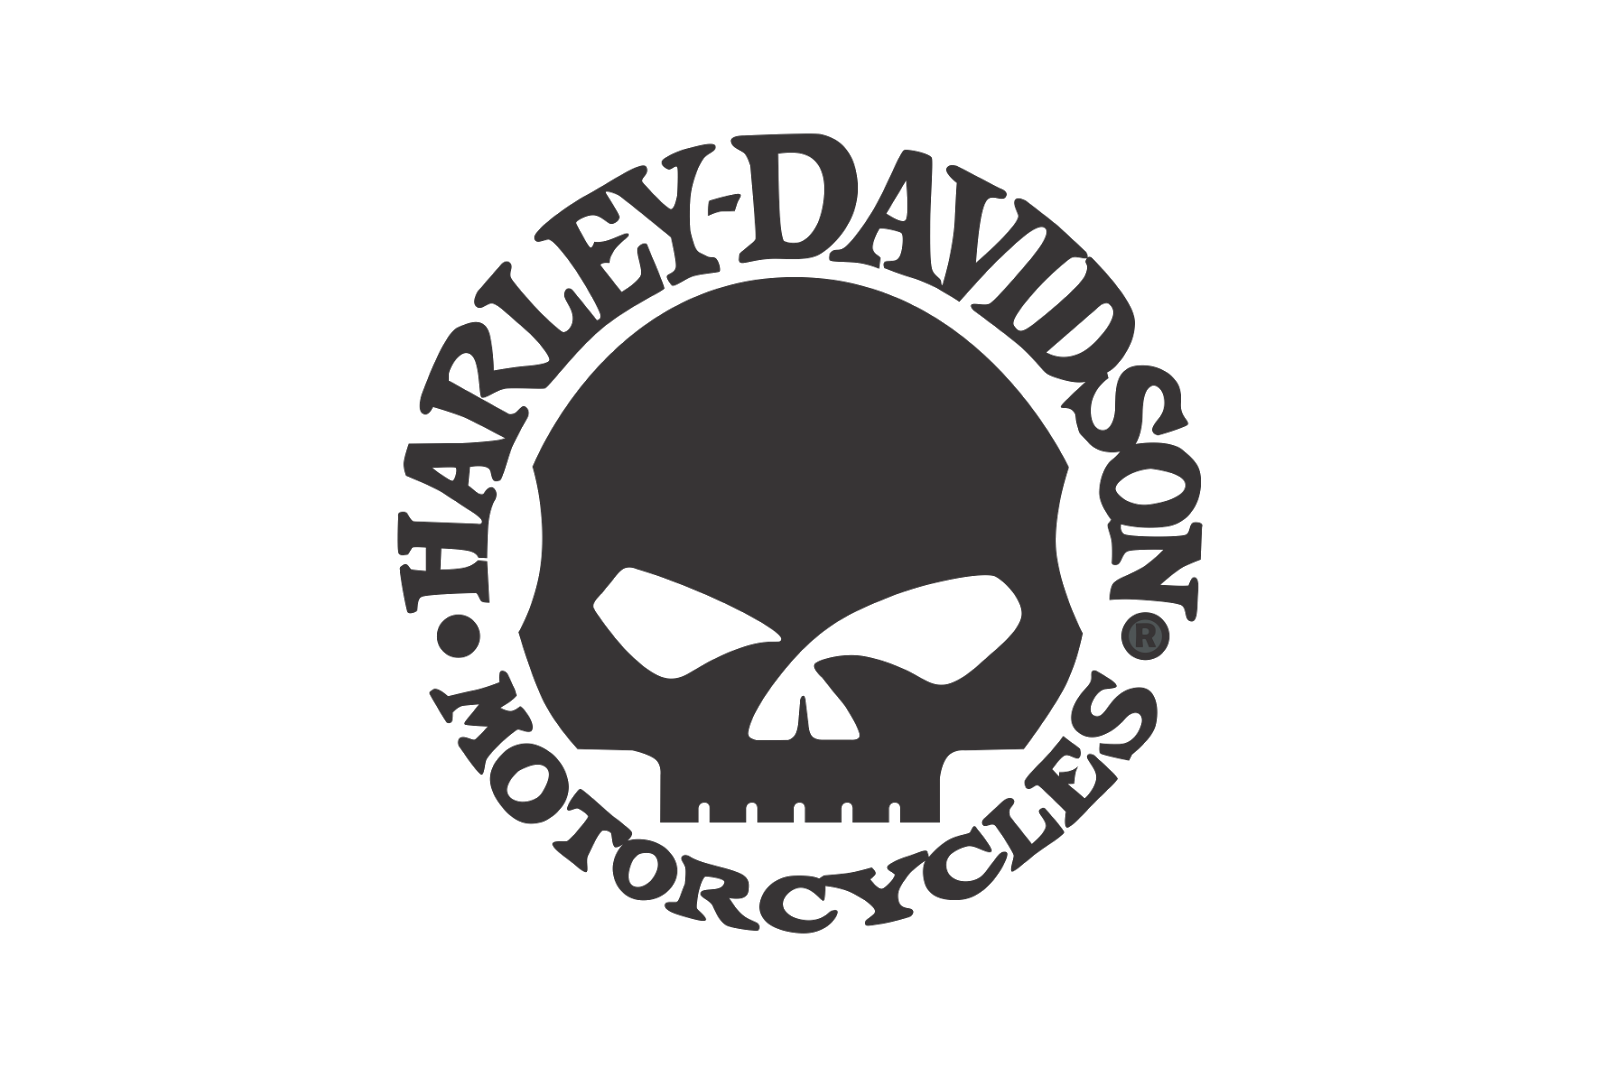  Harley Davidson Skull Logo Logo Share